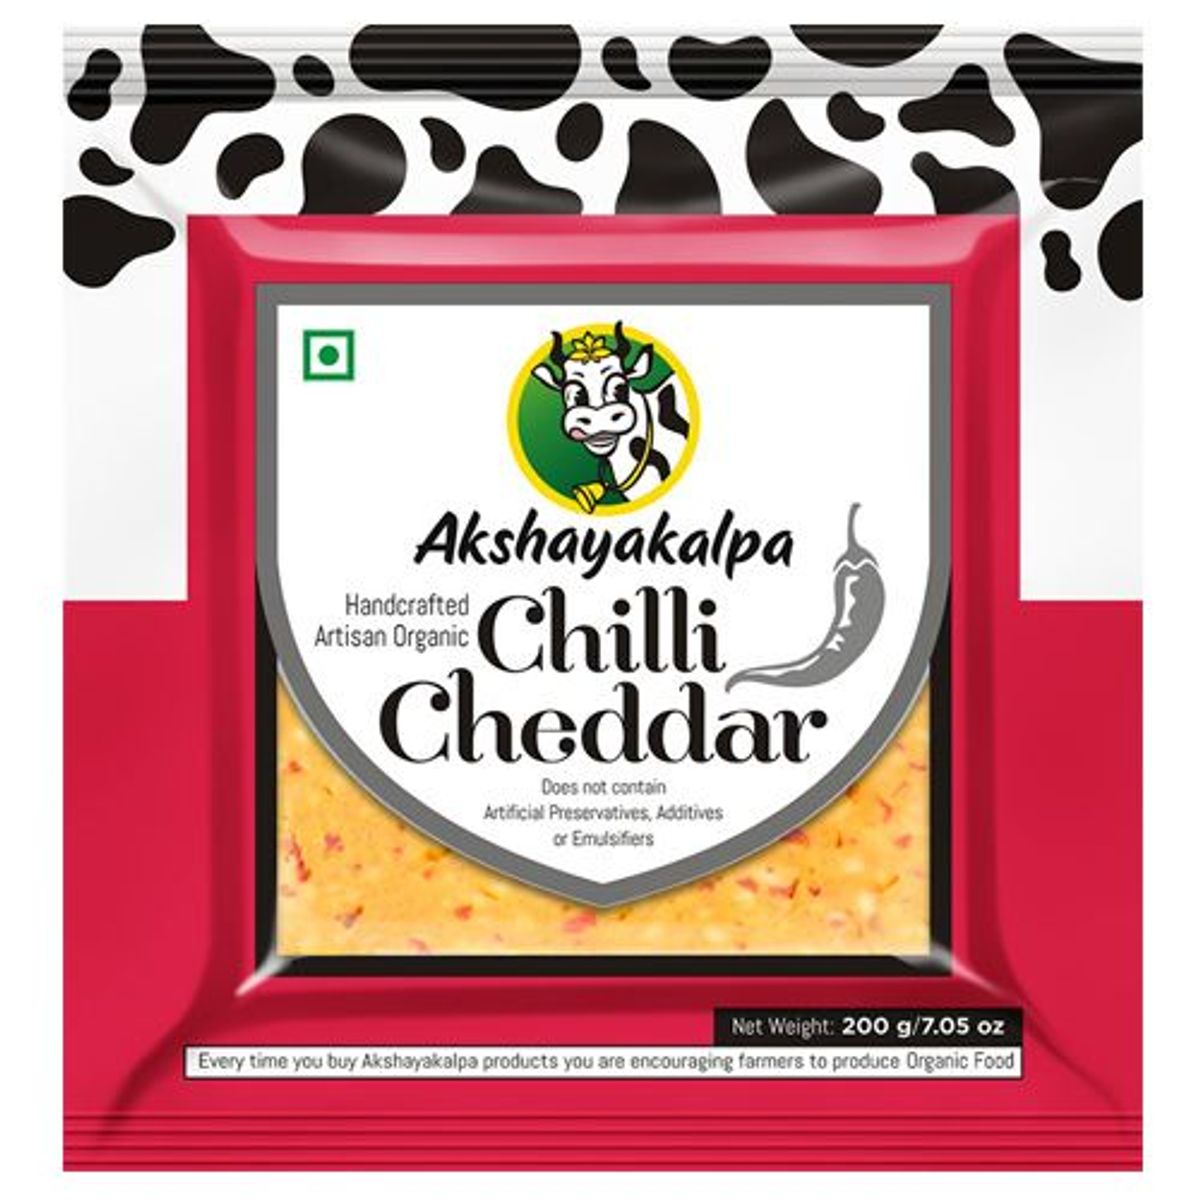 Akshayakalpa Chilli Cheddar Cheese Image